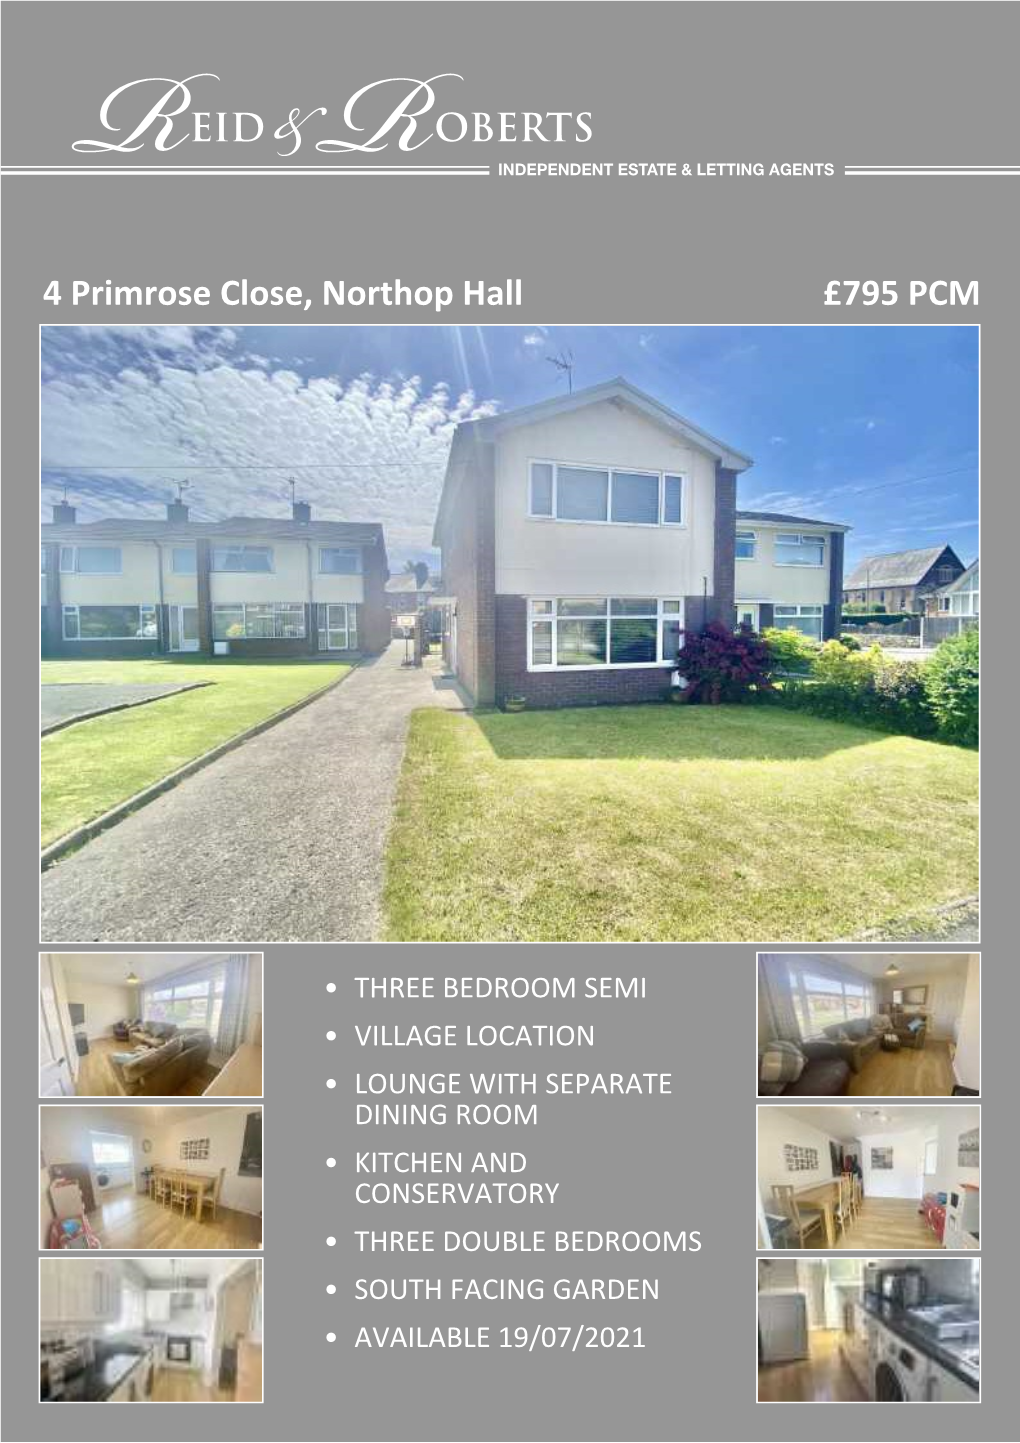 4 Primrose Close, Northop Hall £795 PCM